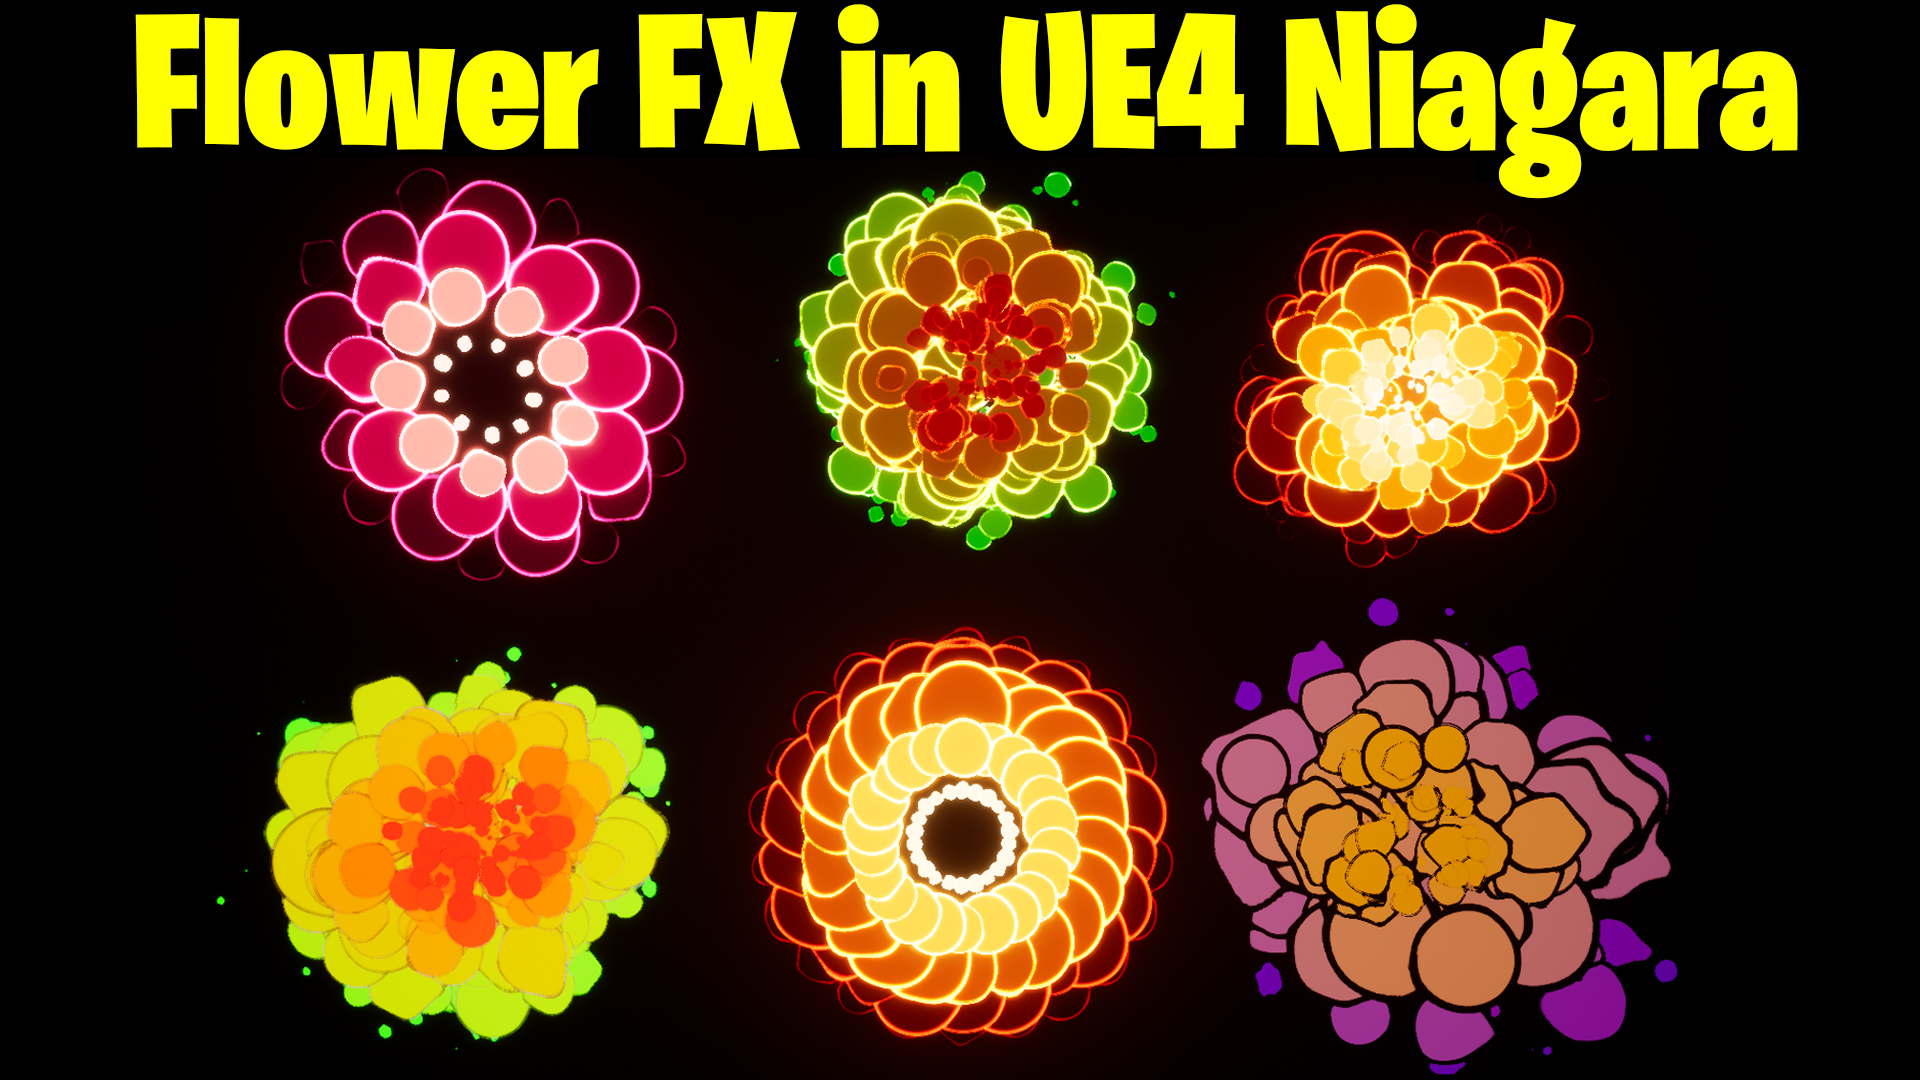 Flower_FX_ue4_niagara.jpg